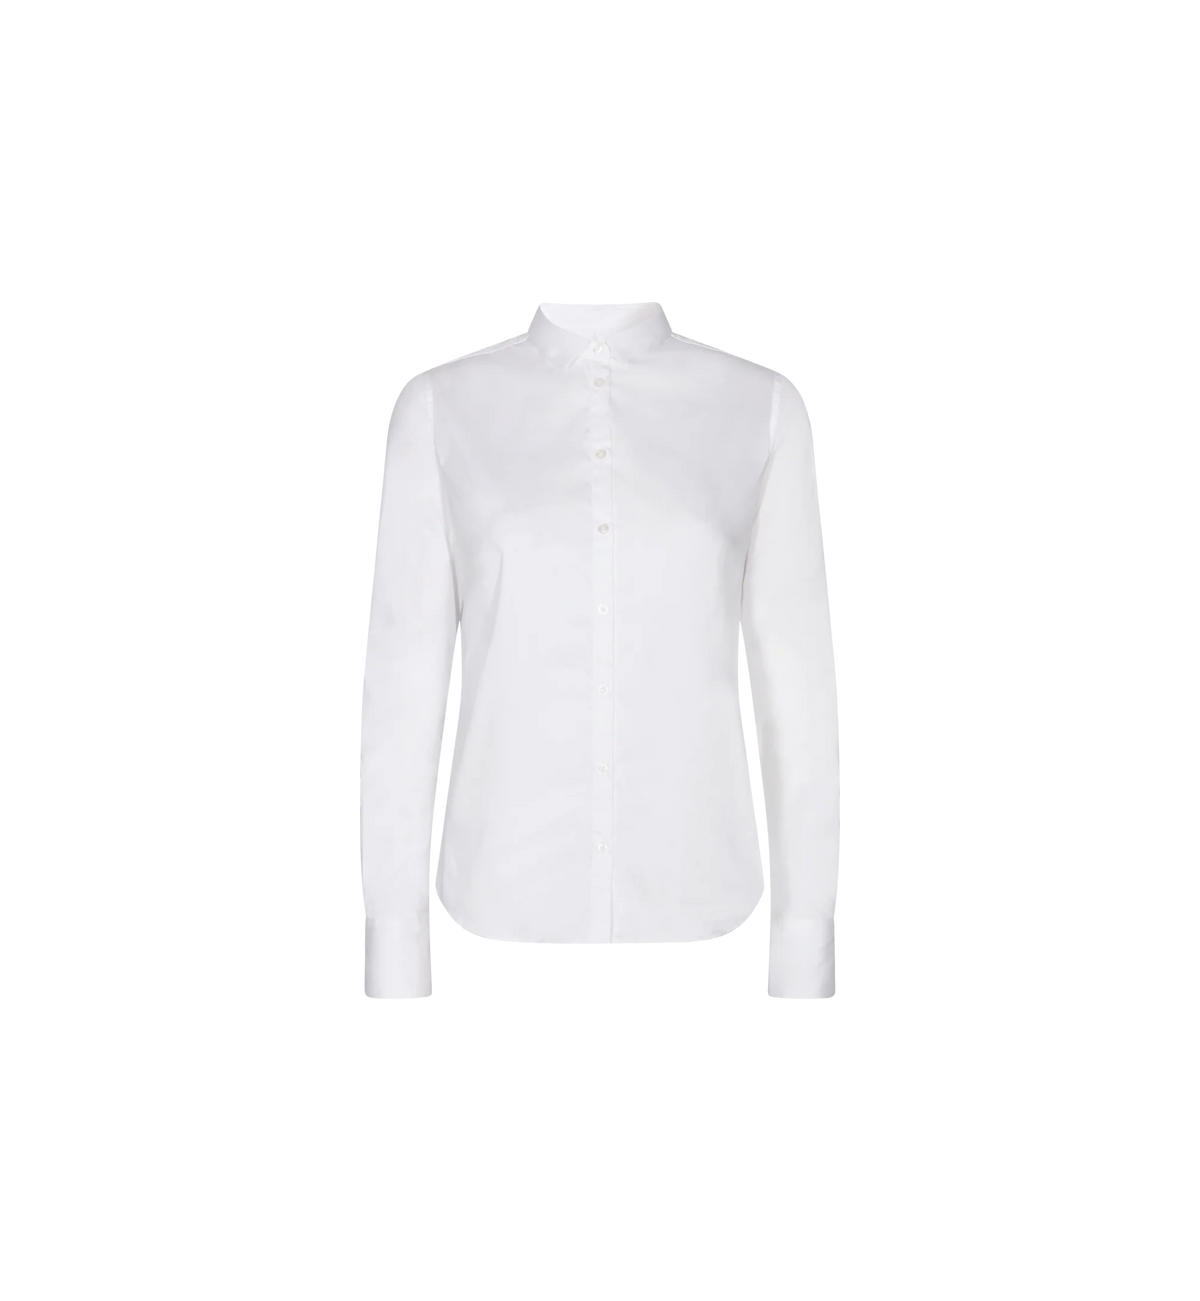 White jersey shirt with a shaped hem